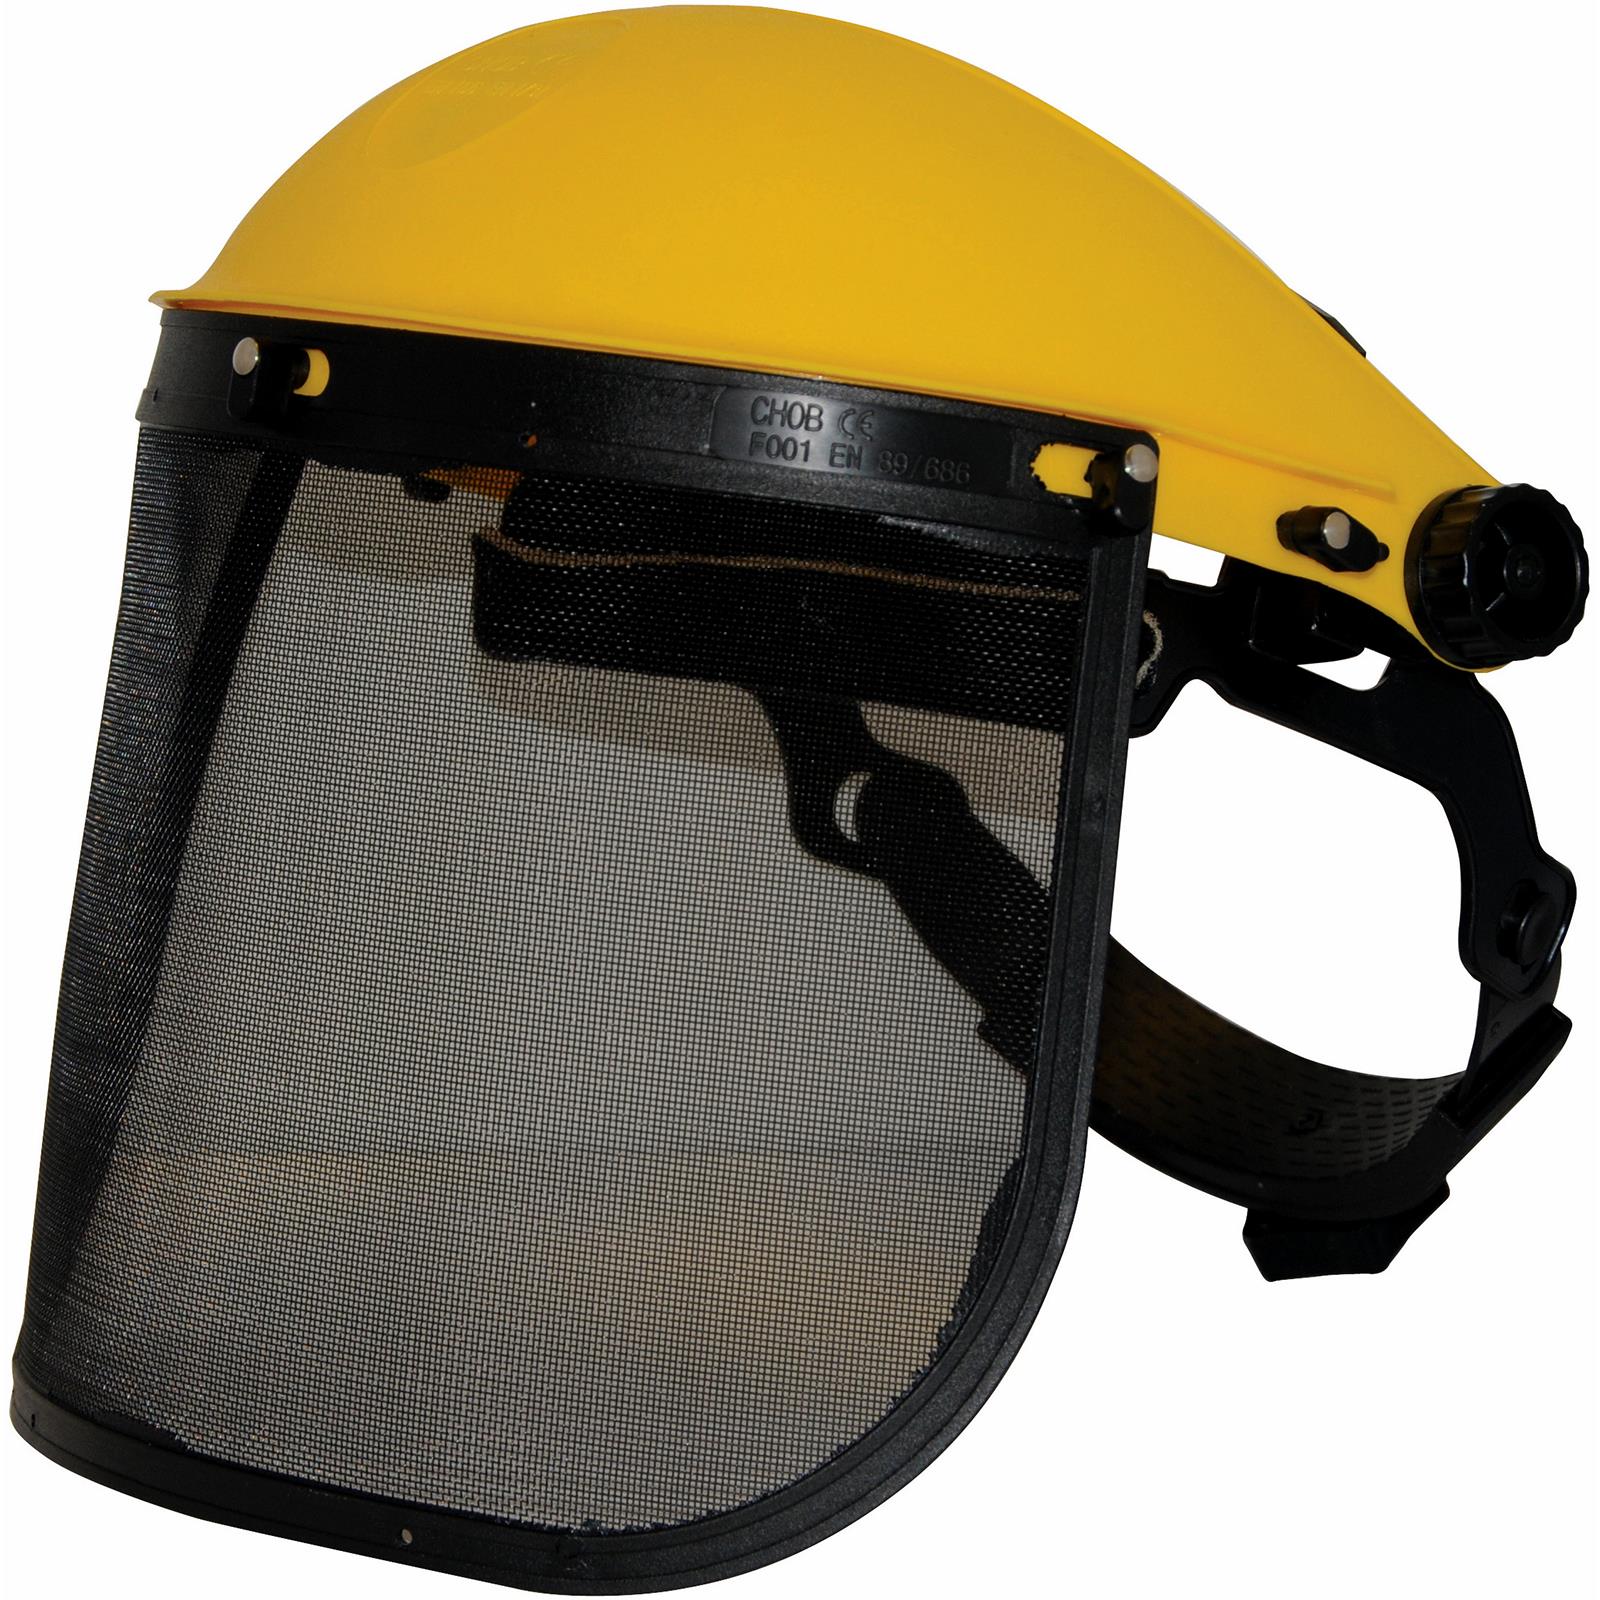 Silverline Mesh Safety Visor Face Eye Protection Shield Helmet Garden Strimming